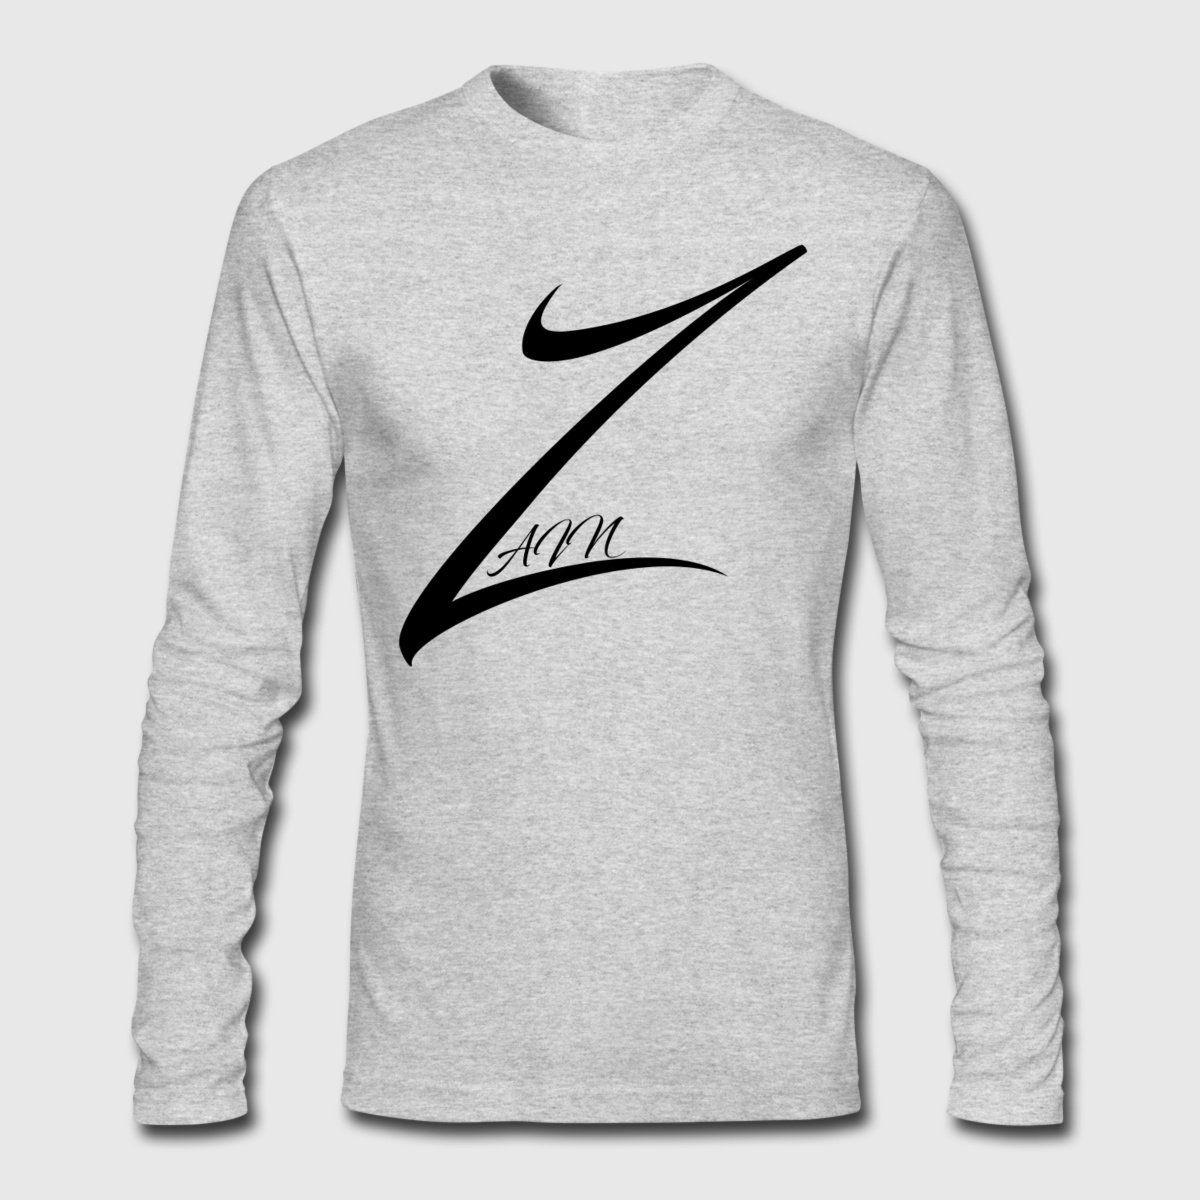 Zain Logo - The Zain Logo Mens Long Sleeve T-Shirt by Next Level heather gray ...